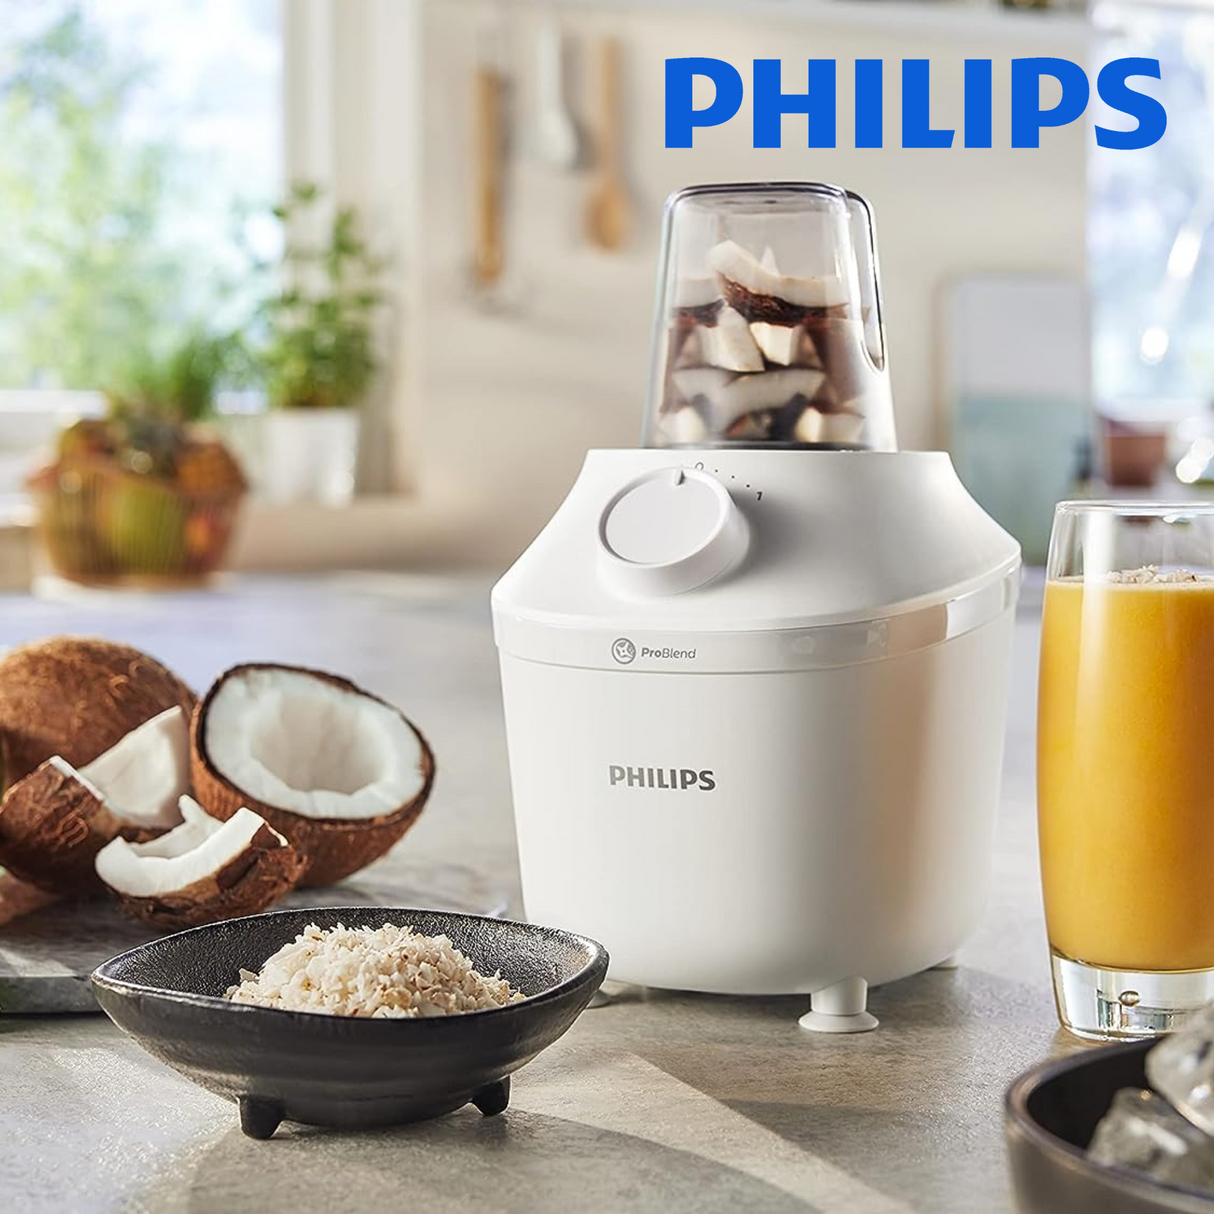 Philips Blender - 450 Watt, 1.9 Liters